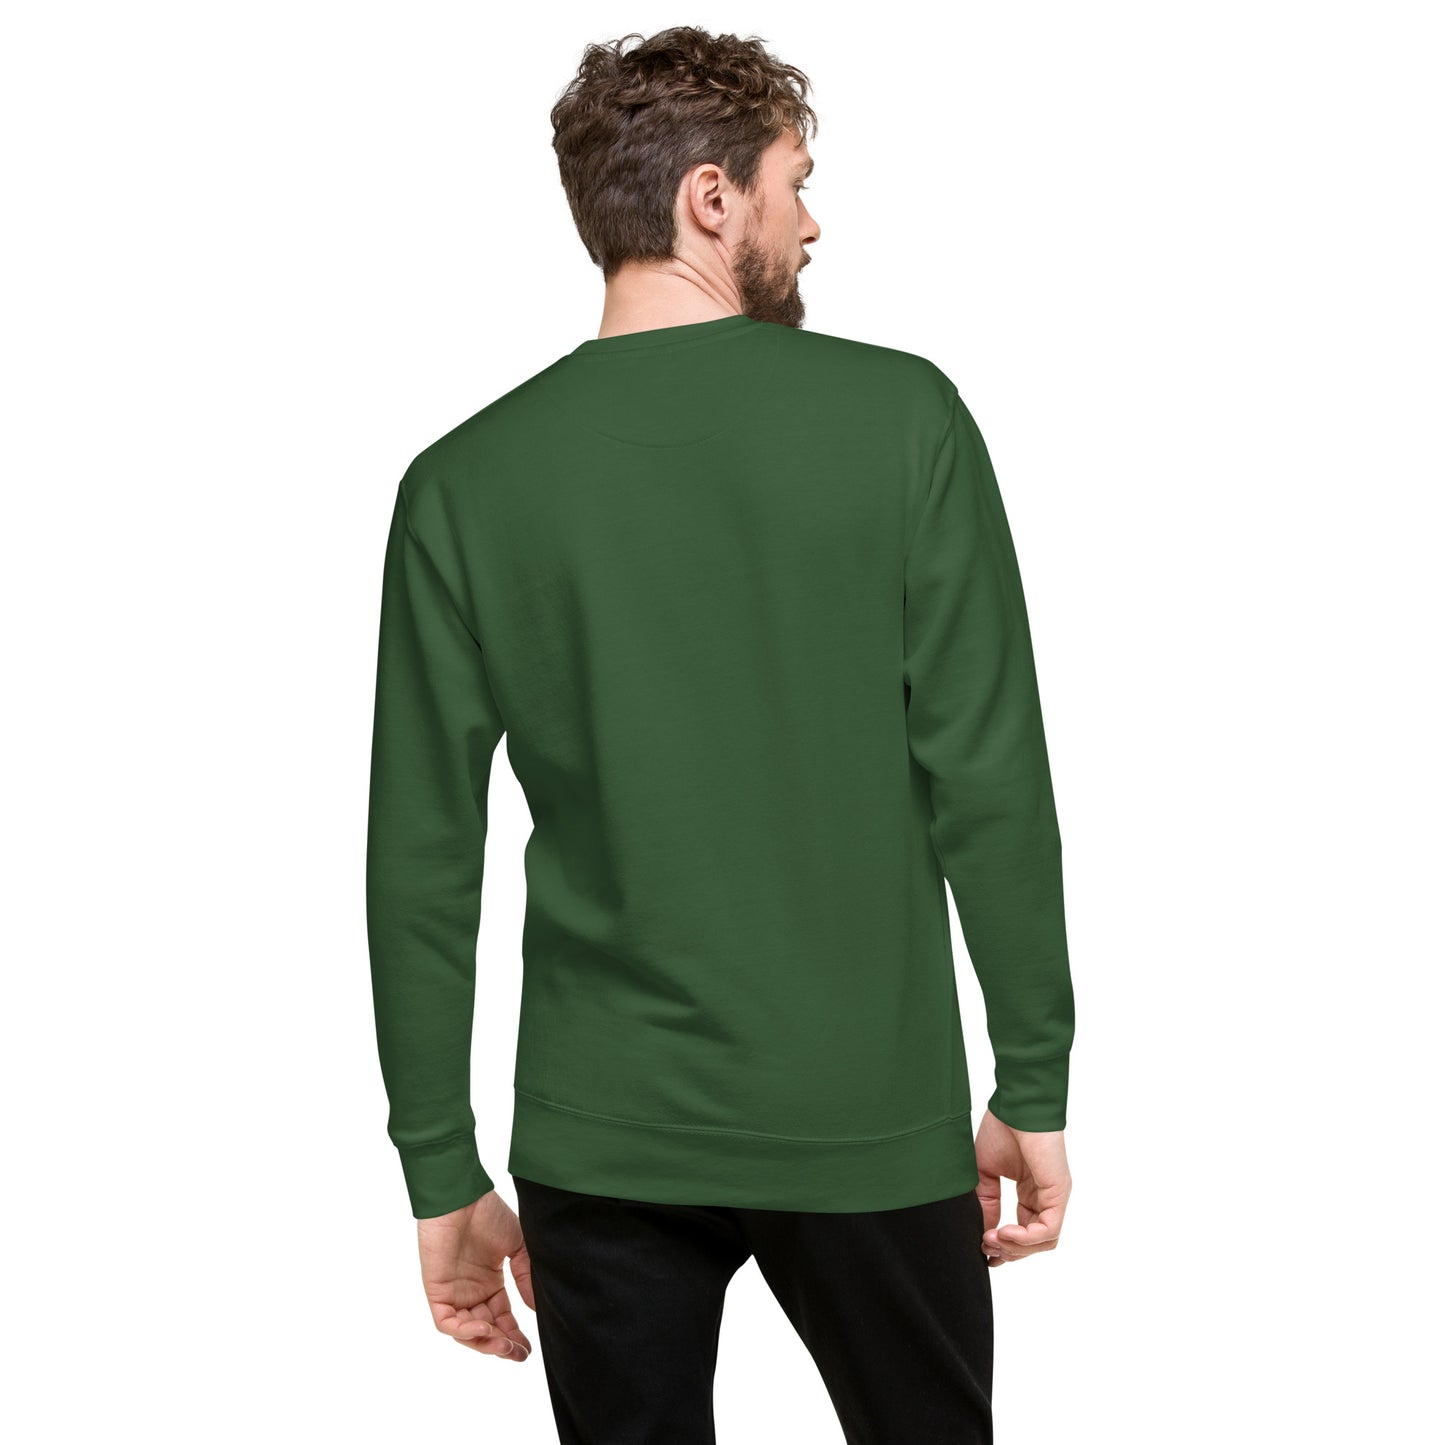 SOULSKY Classic Crew Sweatshirt - Forest Green